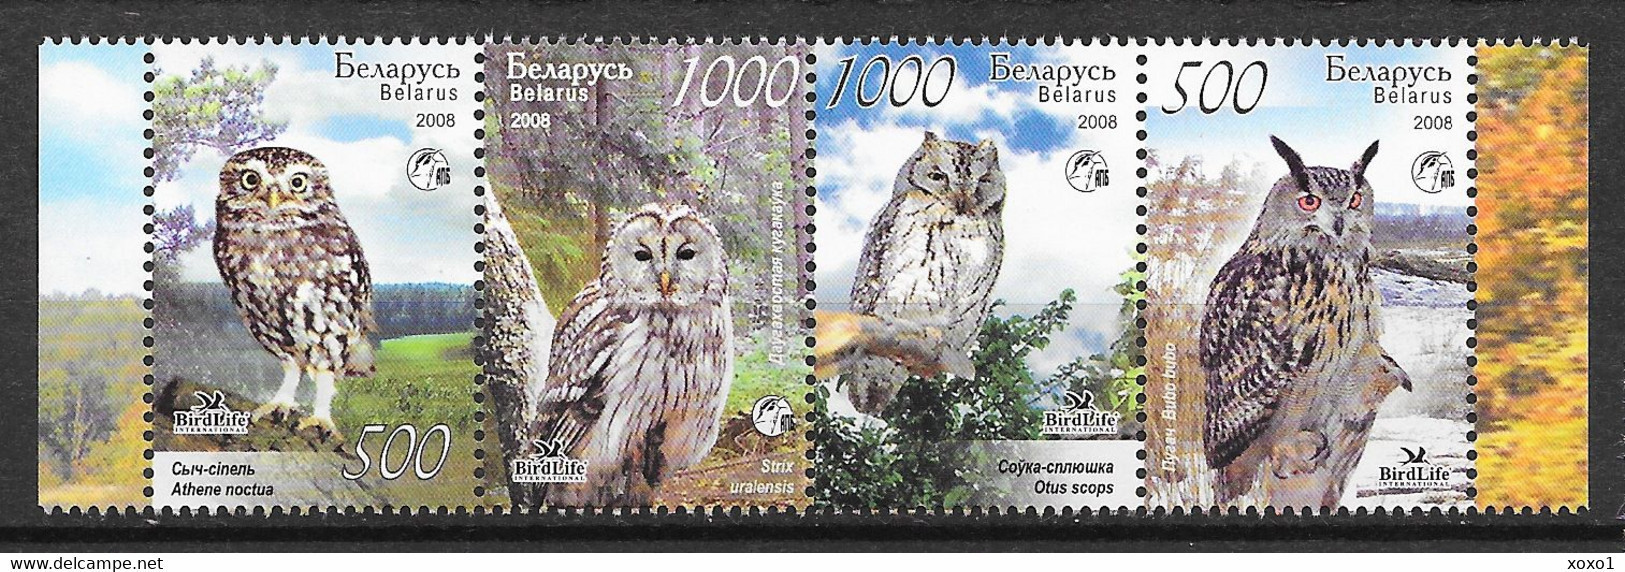 Belarus 2008 MiNr. 750 - 753 Weißrußland Owls II BIRDS BirdLife 4v MNH** 3,00 € - Hiboux & Chouettes